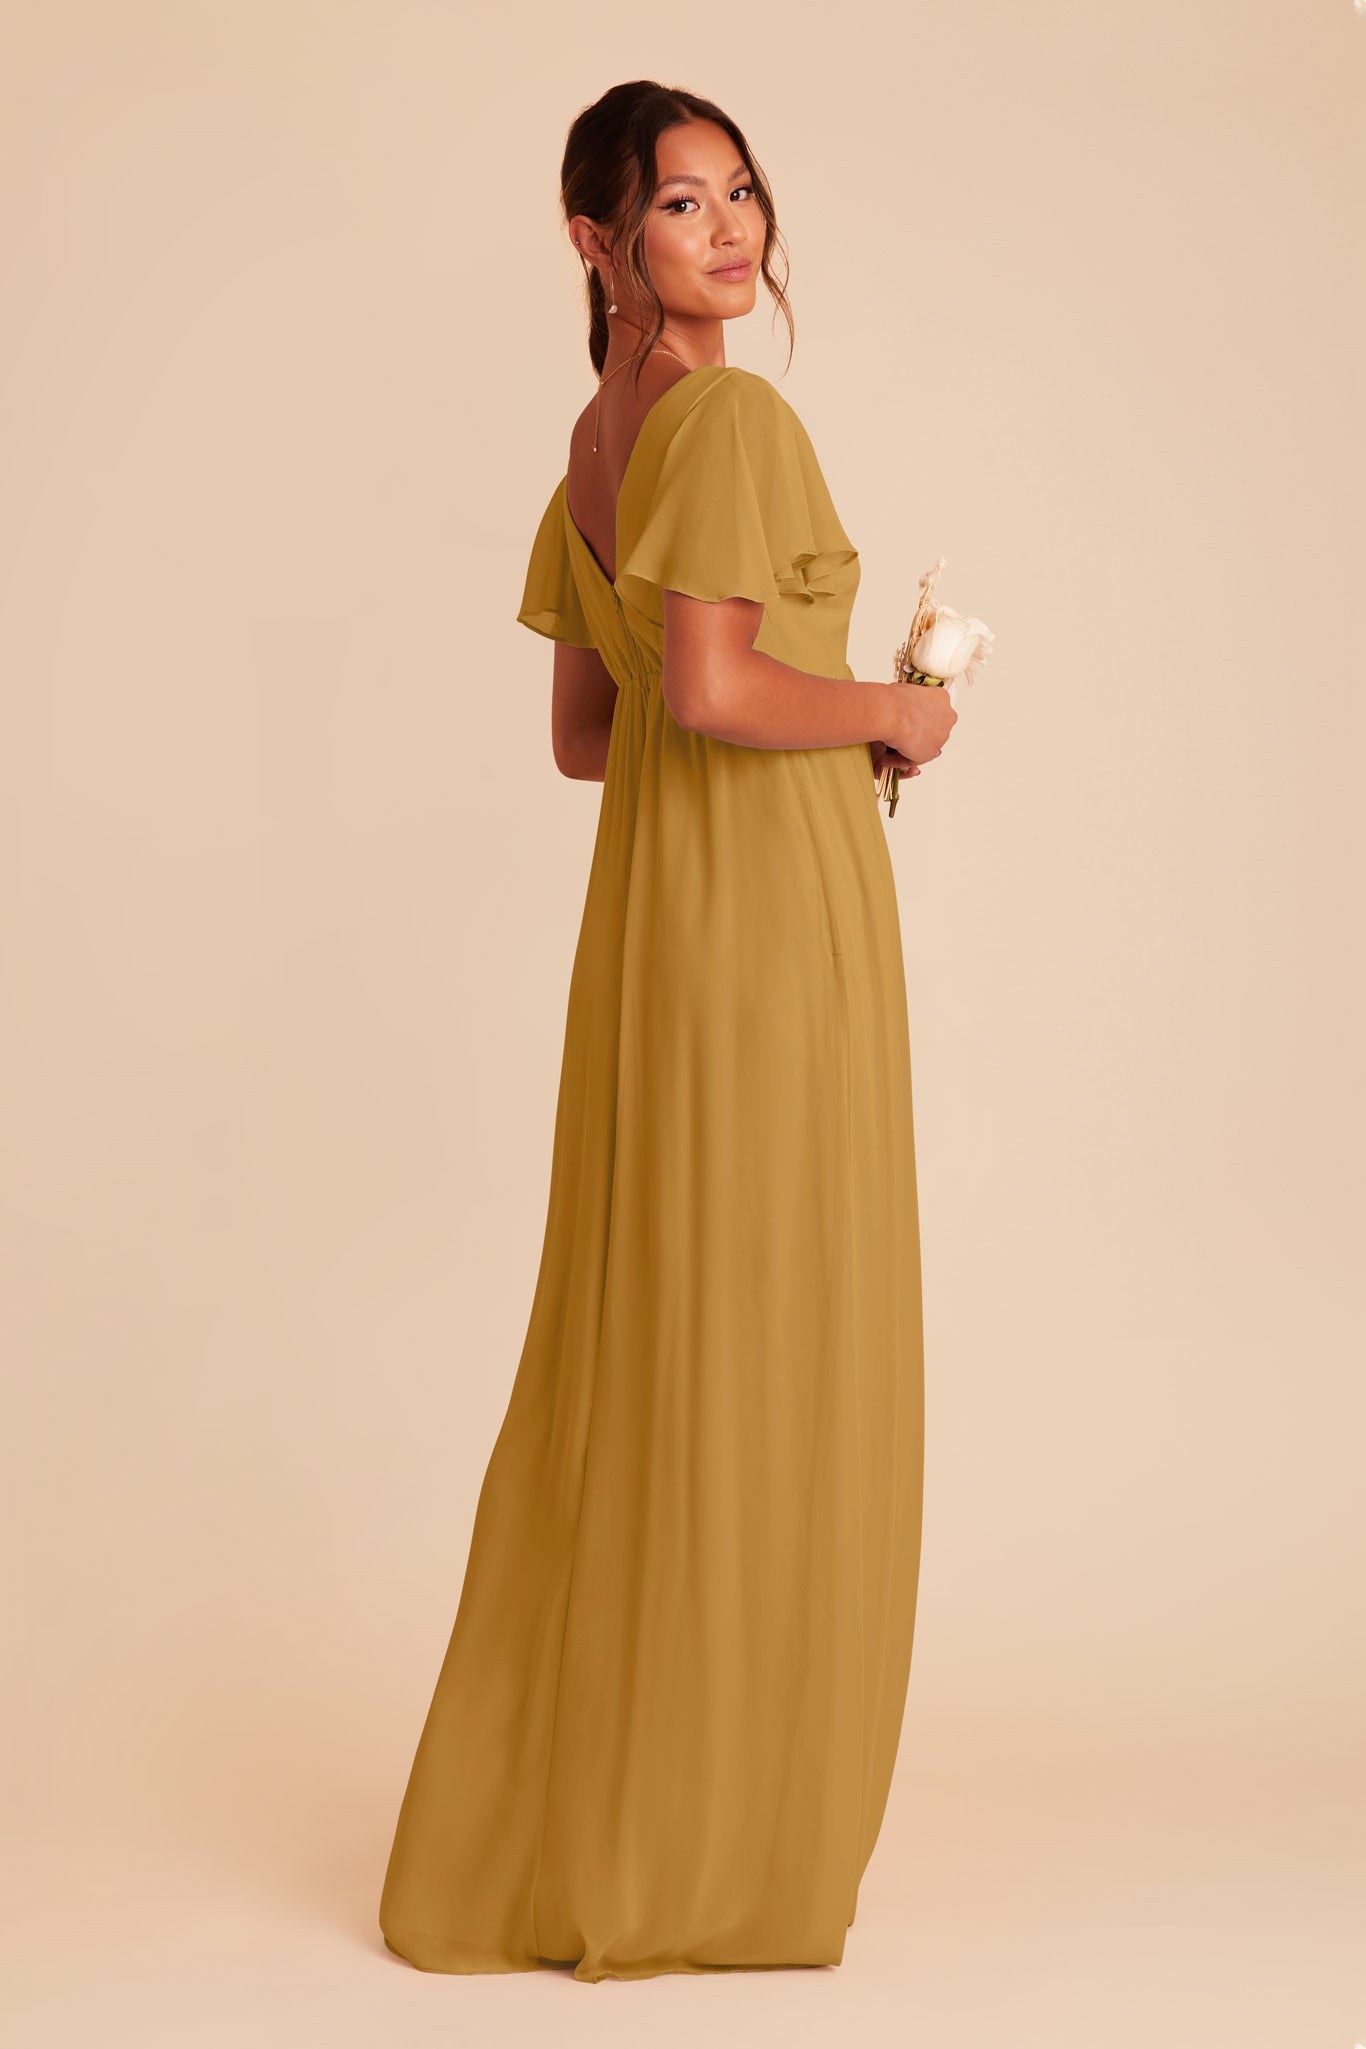 Marigold Hannah Empire Dress by Birdy Grey